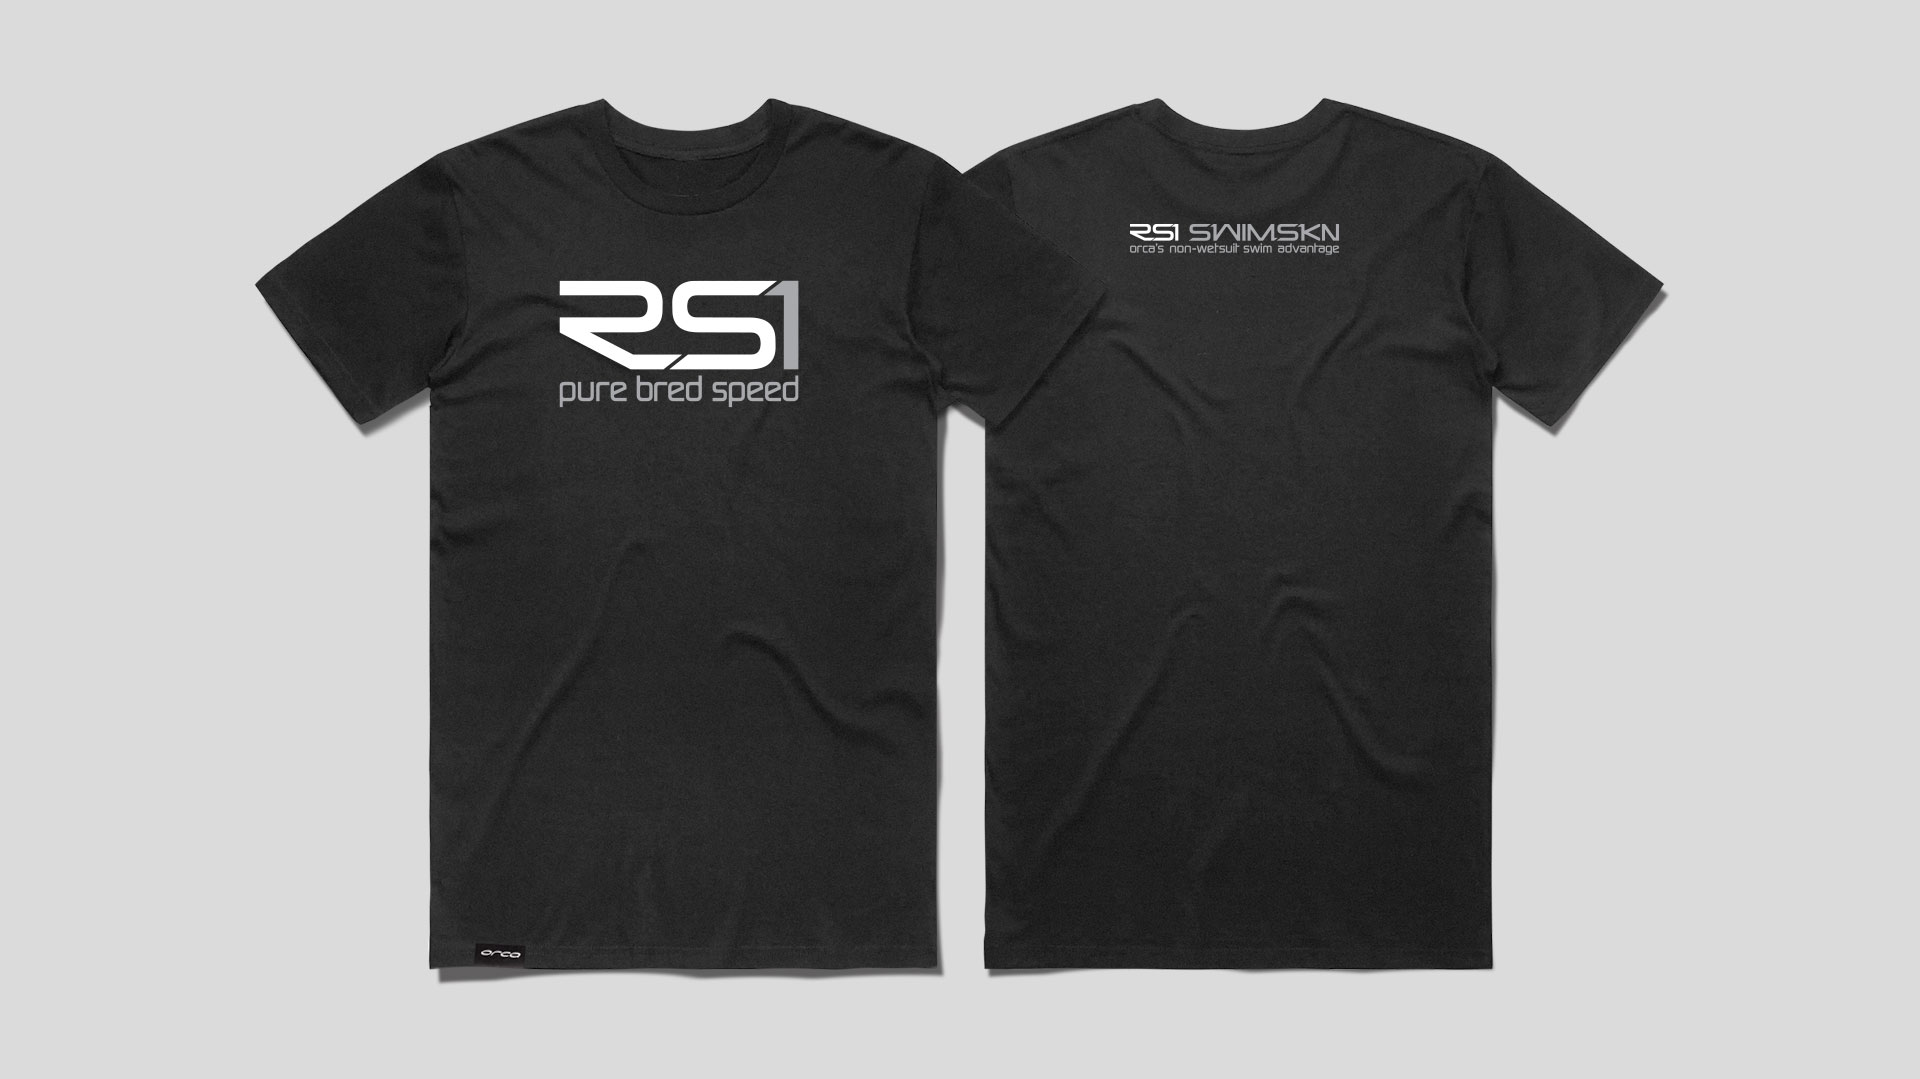 Robertstown_Orca_T-Shirt_RS1